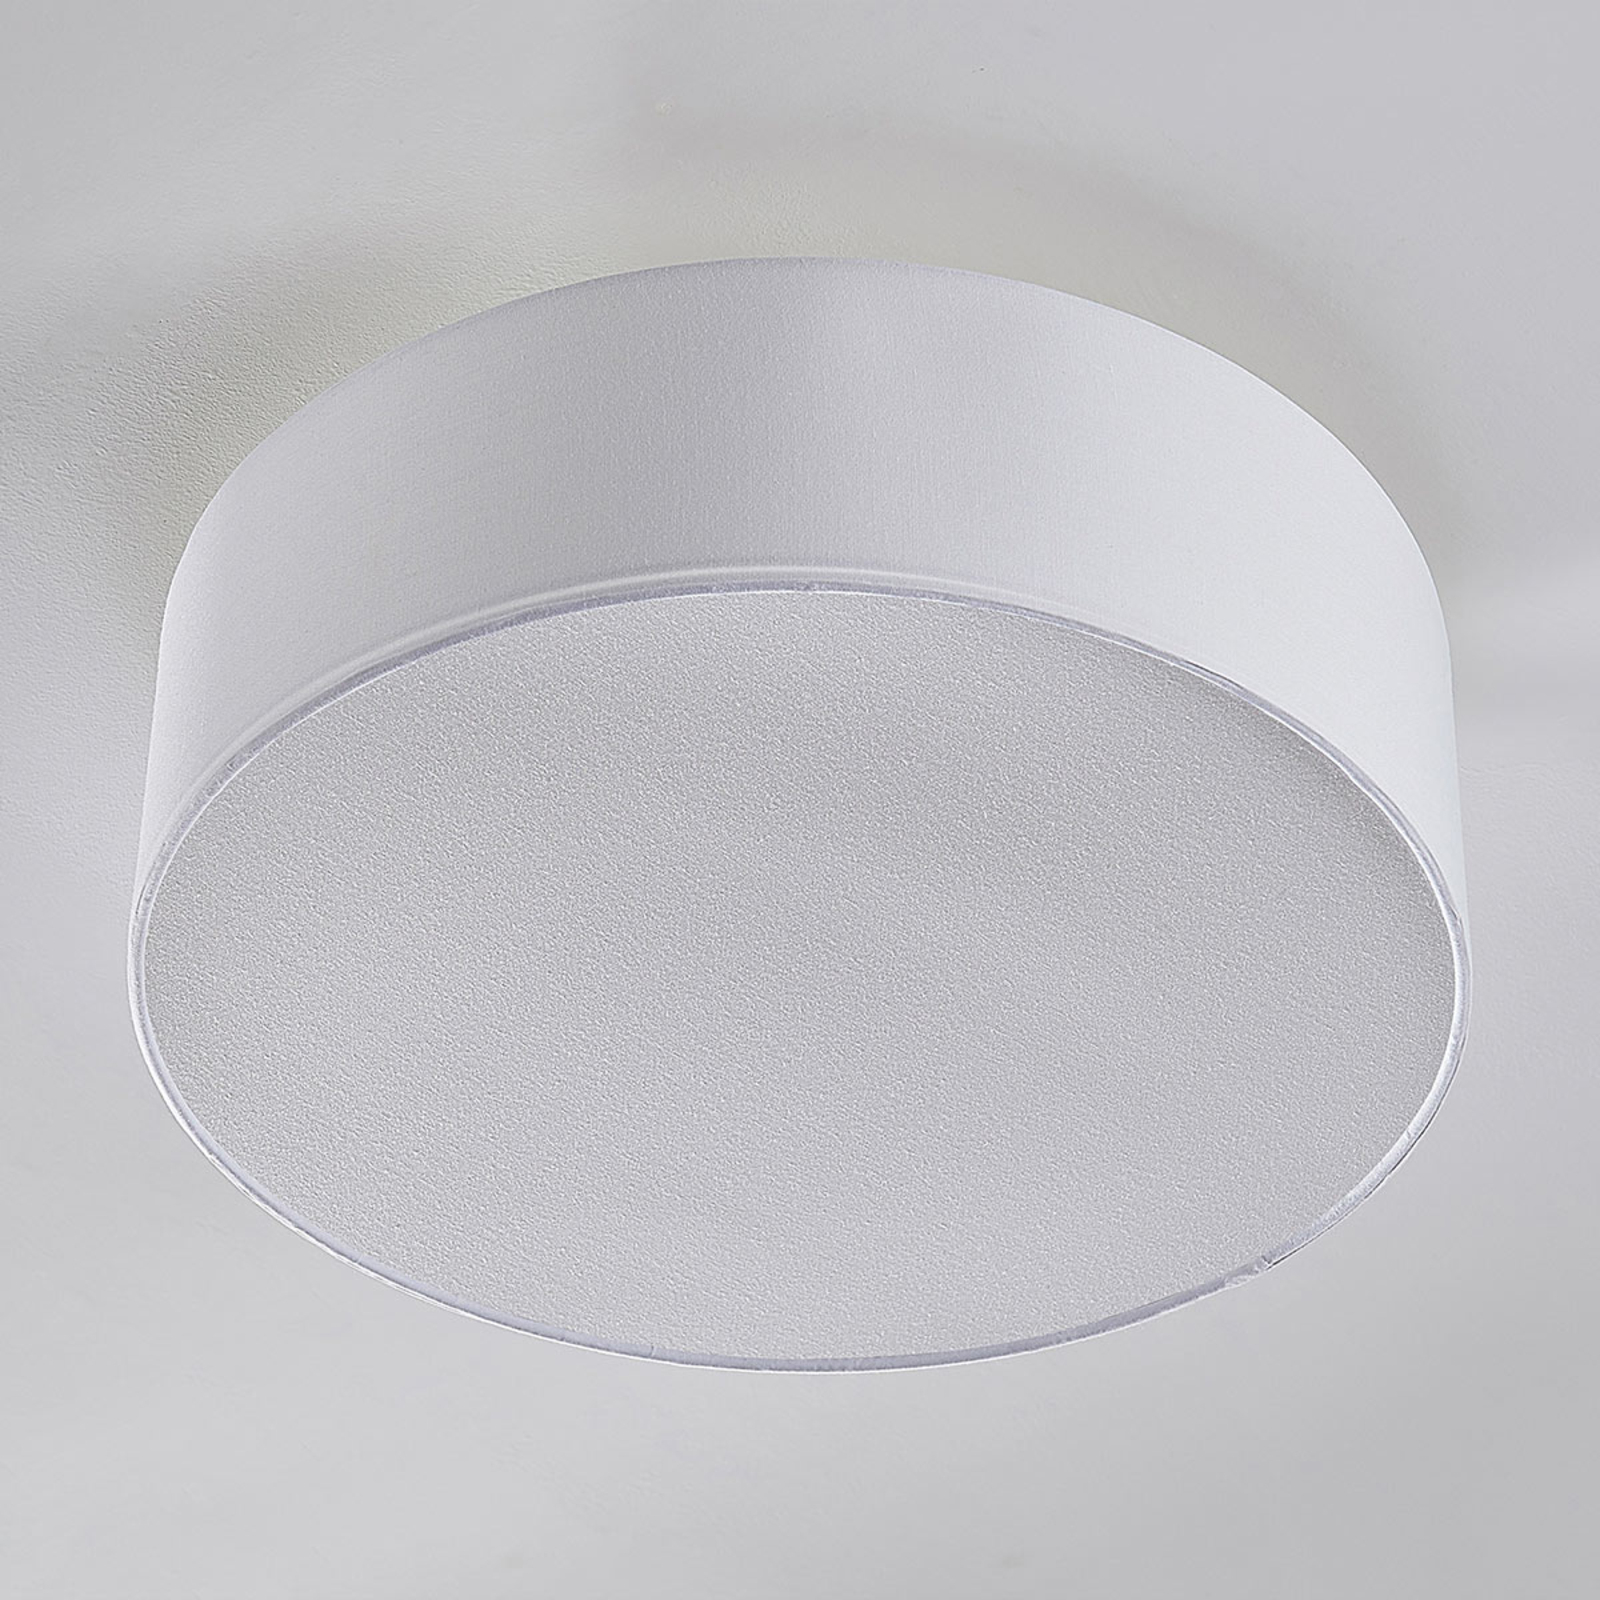 SEBATIN - biała lampa sufitowa z materiału